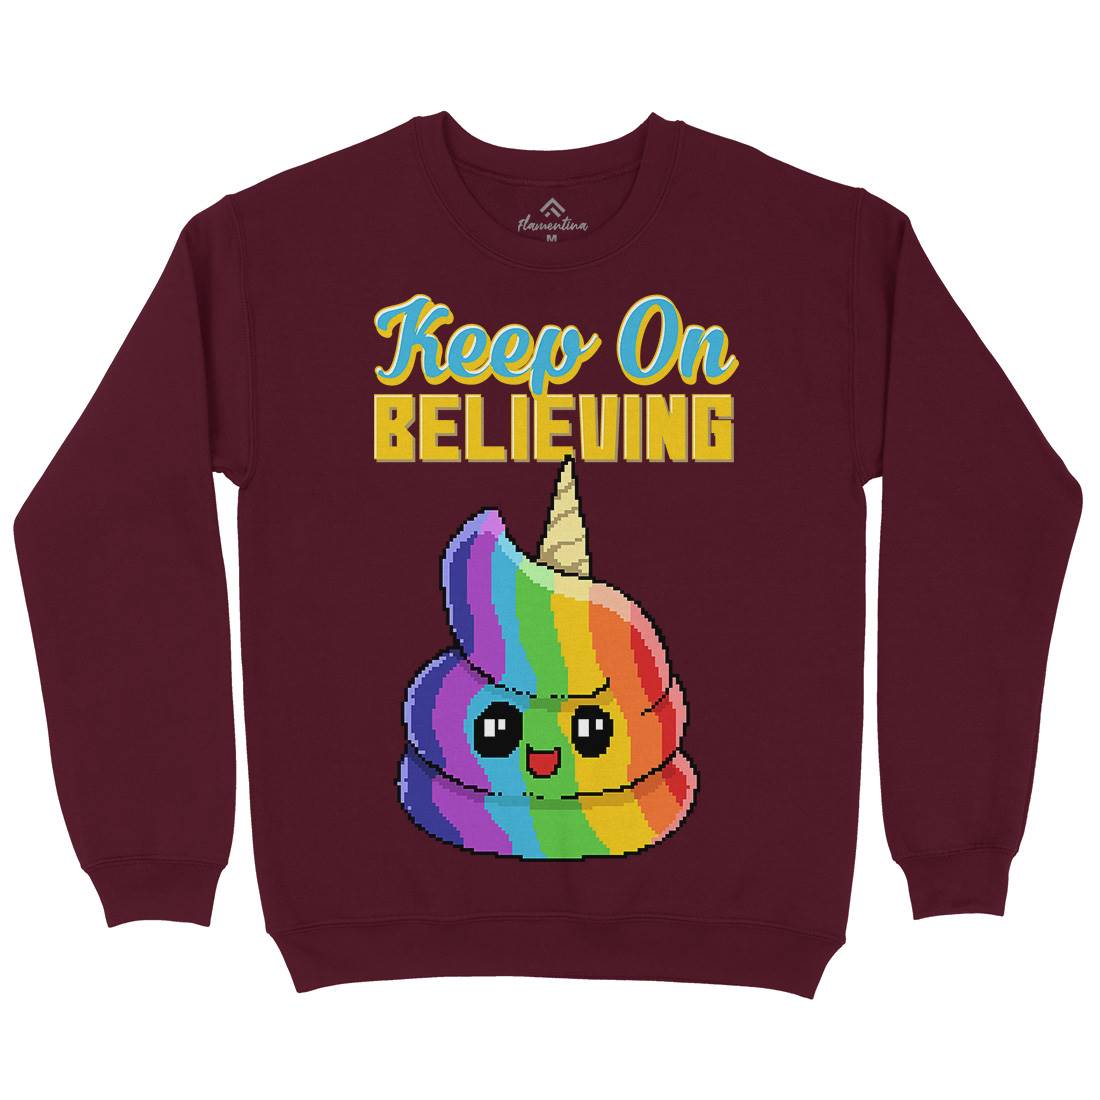 Keep On Believing Kids Crew Neck Sweatshirt Retro B921